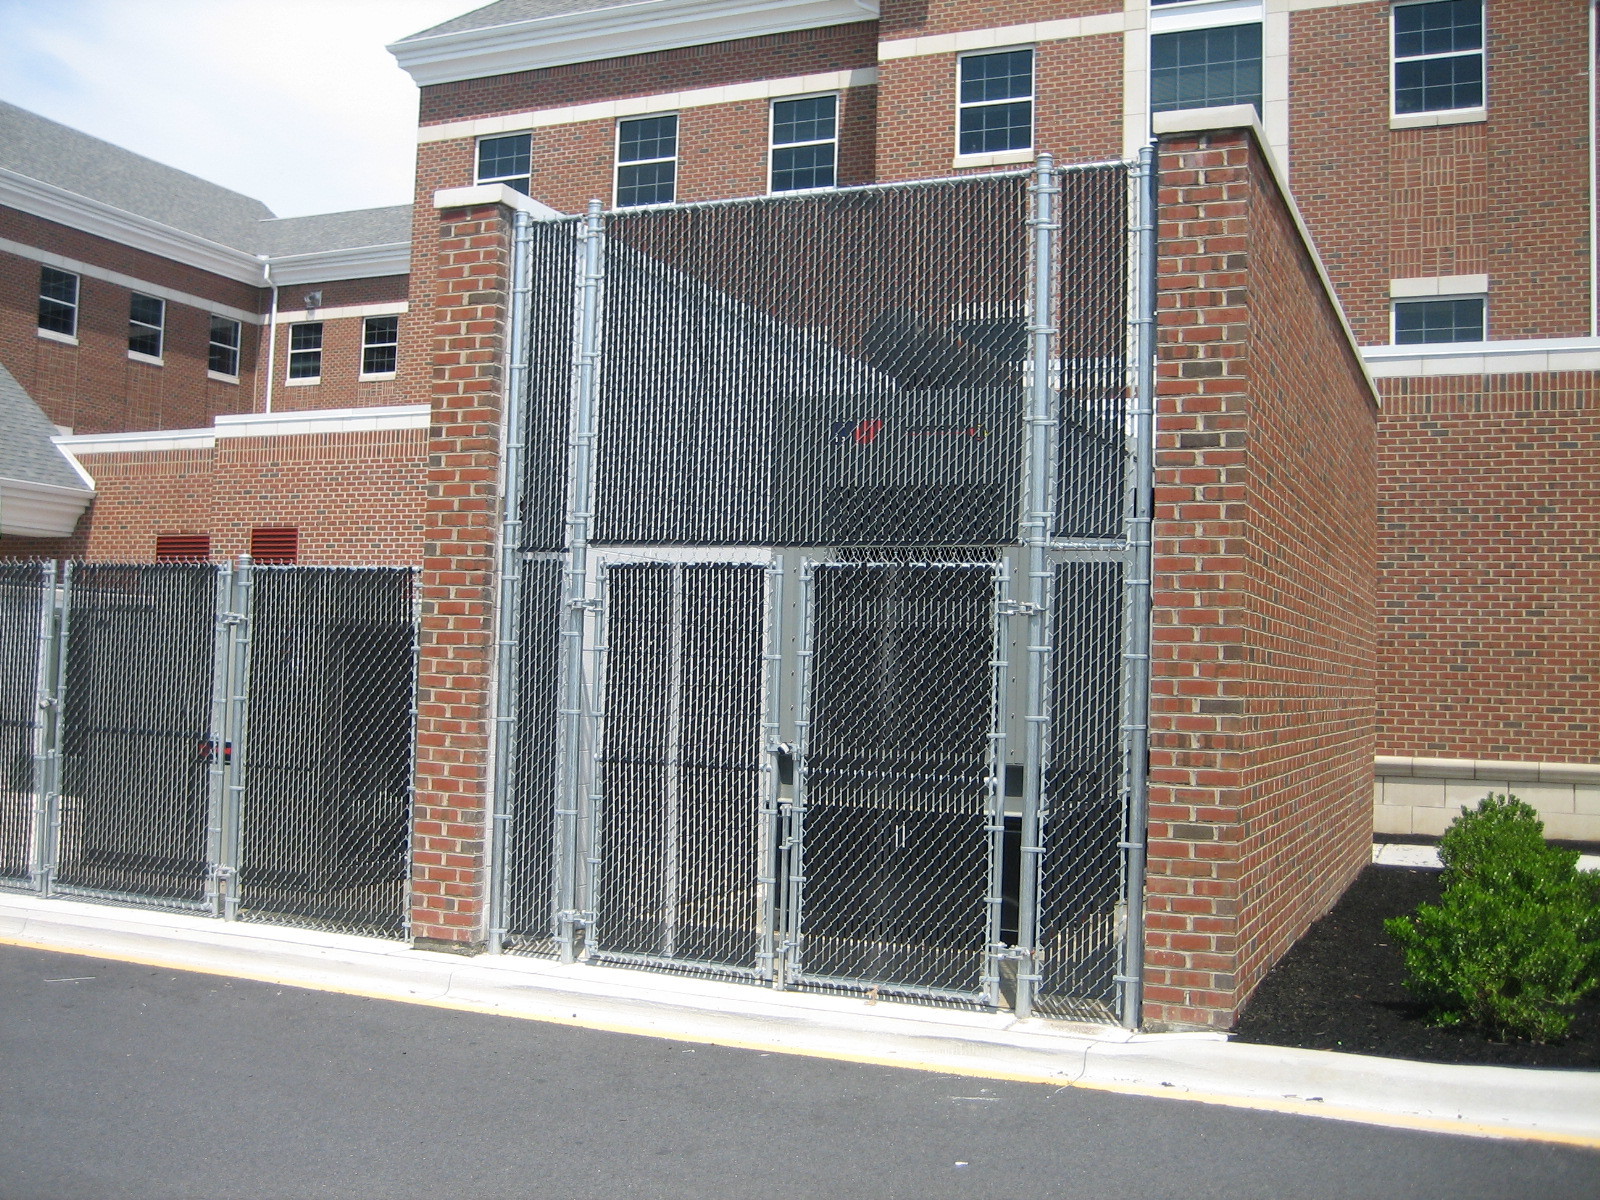 147_chainlink-commerical-grade-security-fencejpg Eden Hill Medical Center